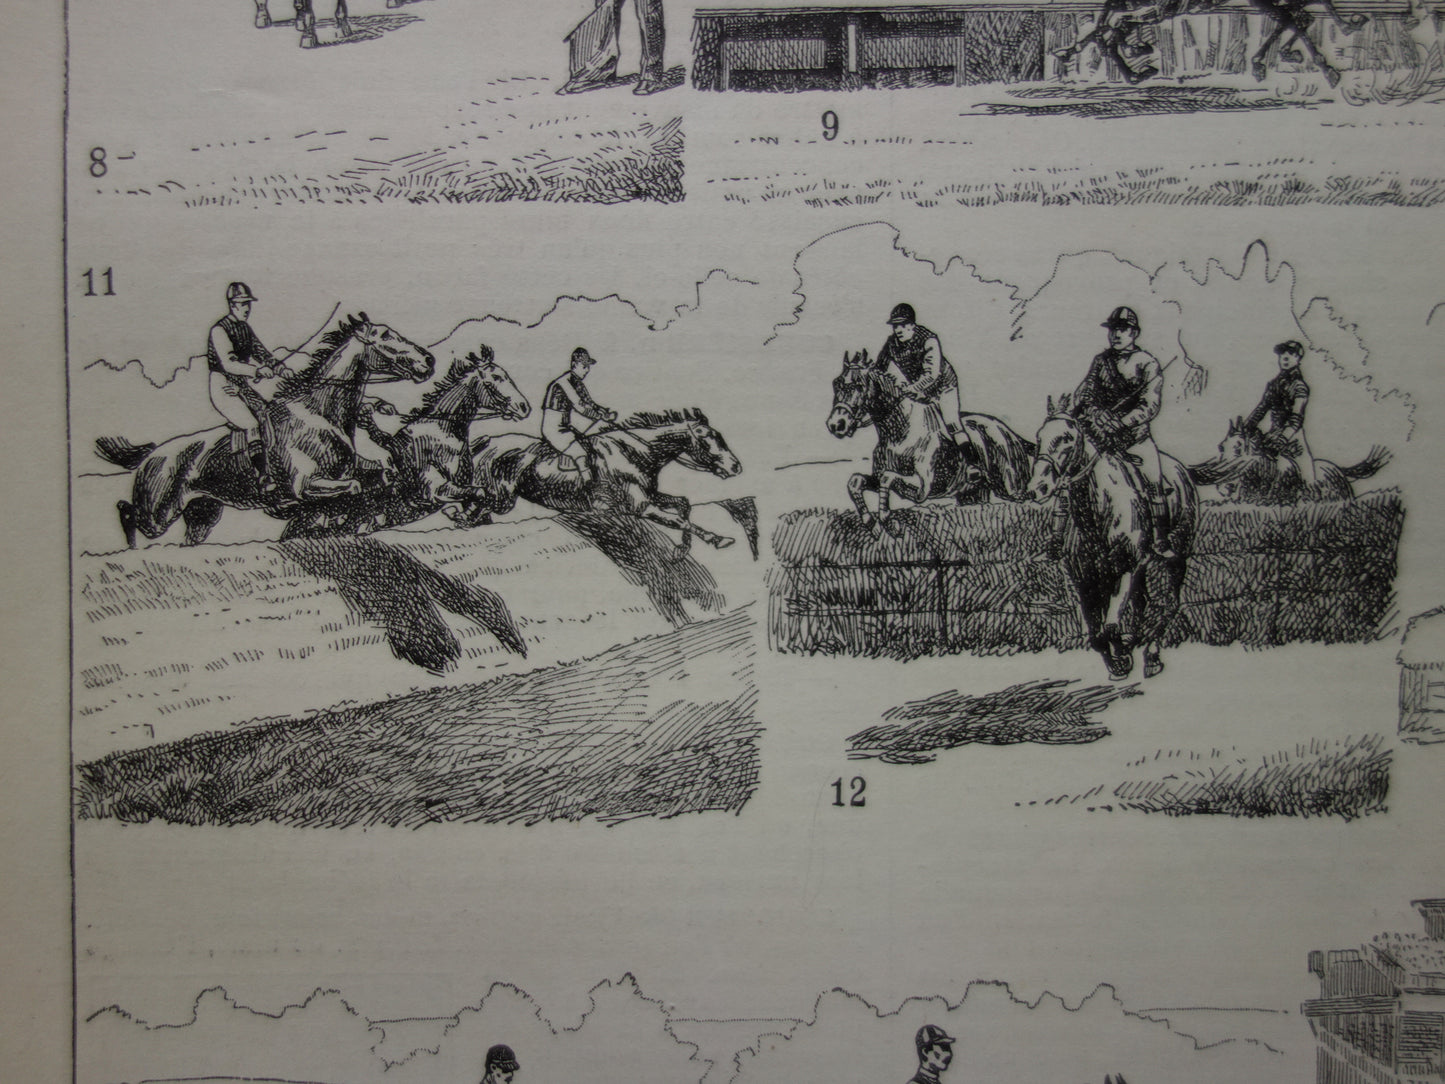 Rensport vintage illustratie - originele antieke prent paardenrace - paarden jockey paardenrennen oude print